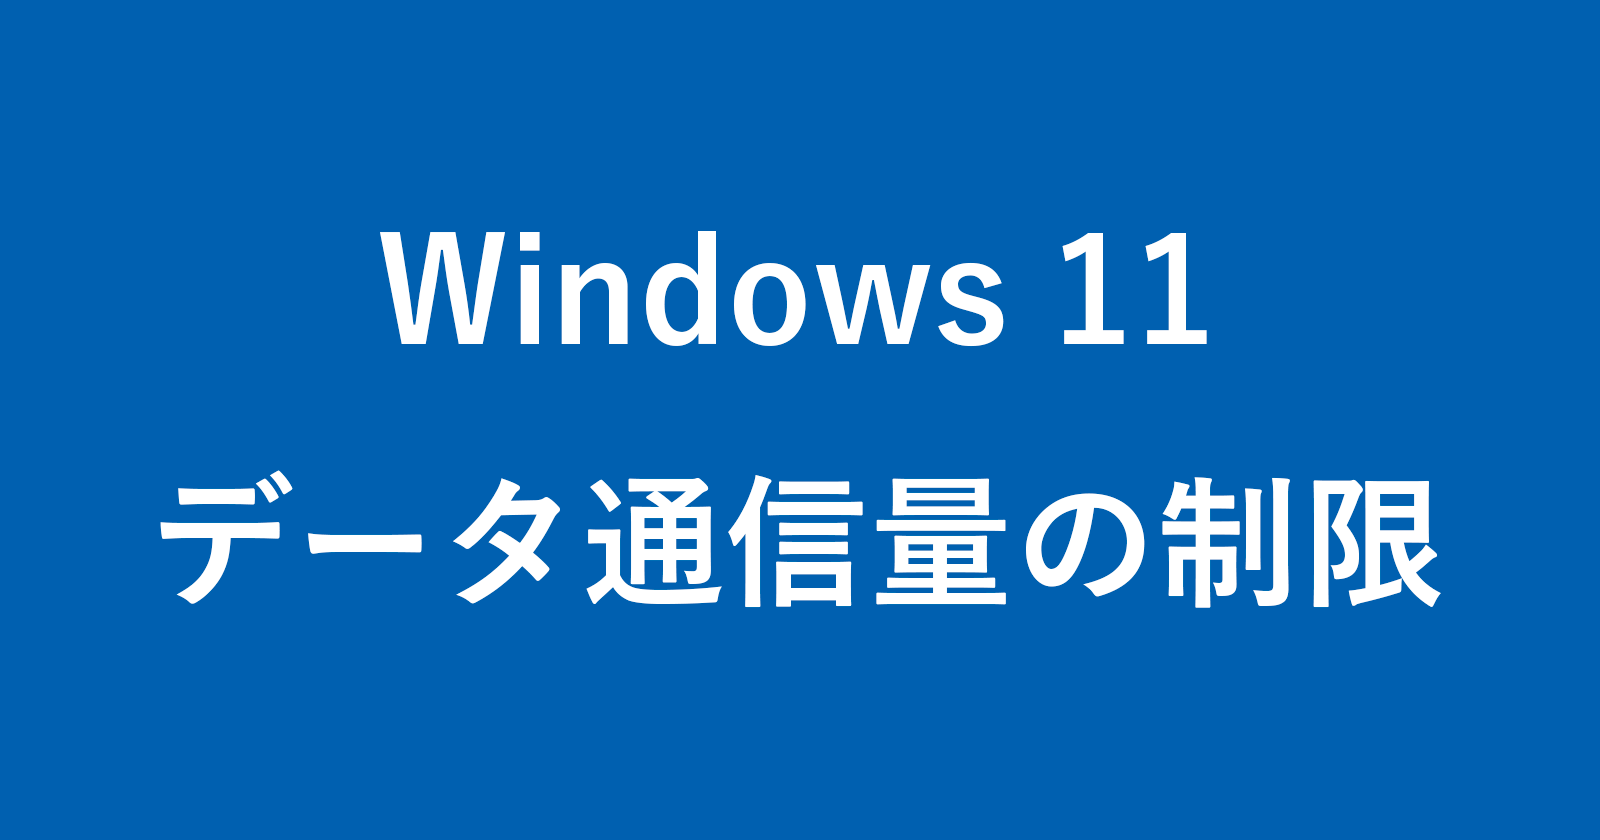 windows 11 internet data limit